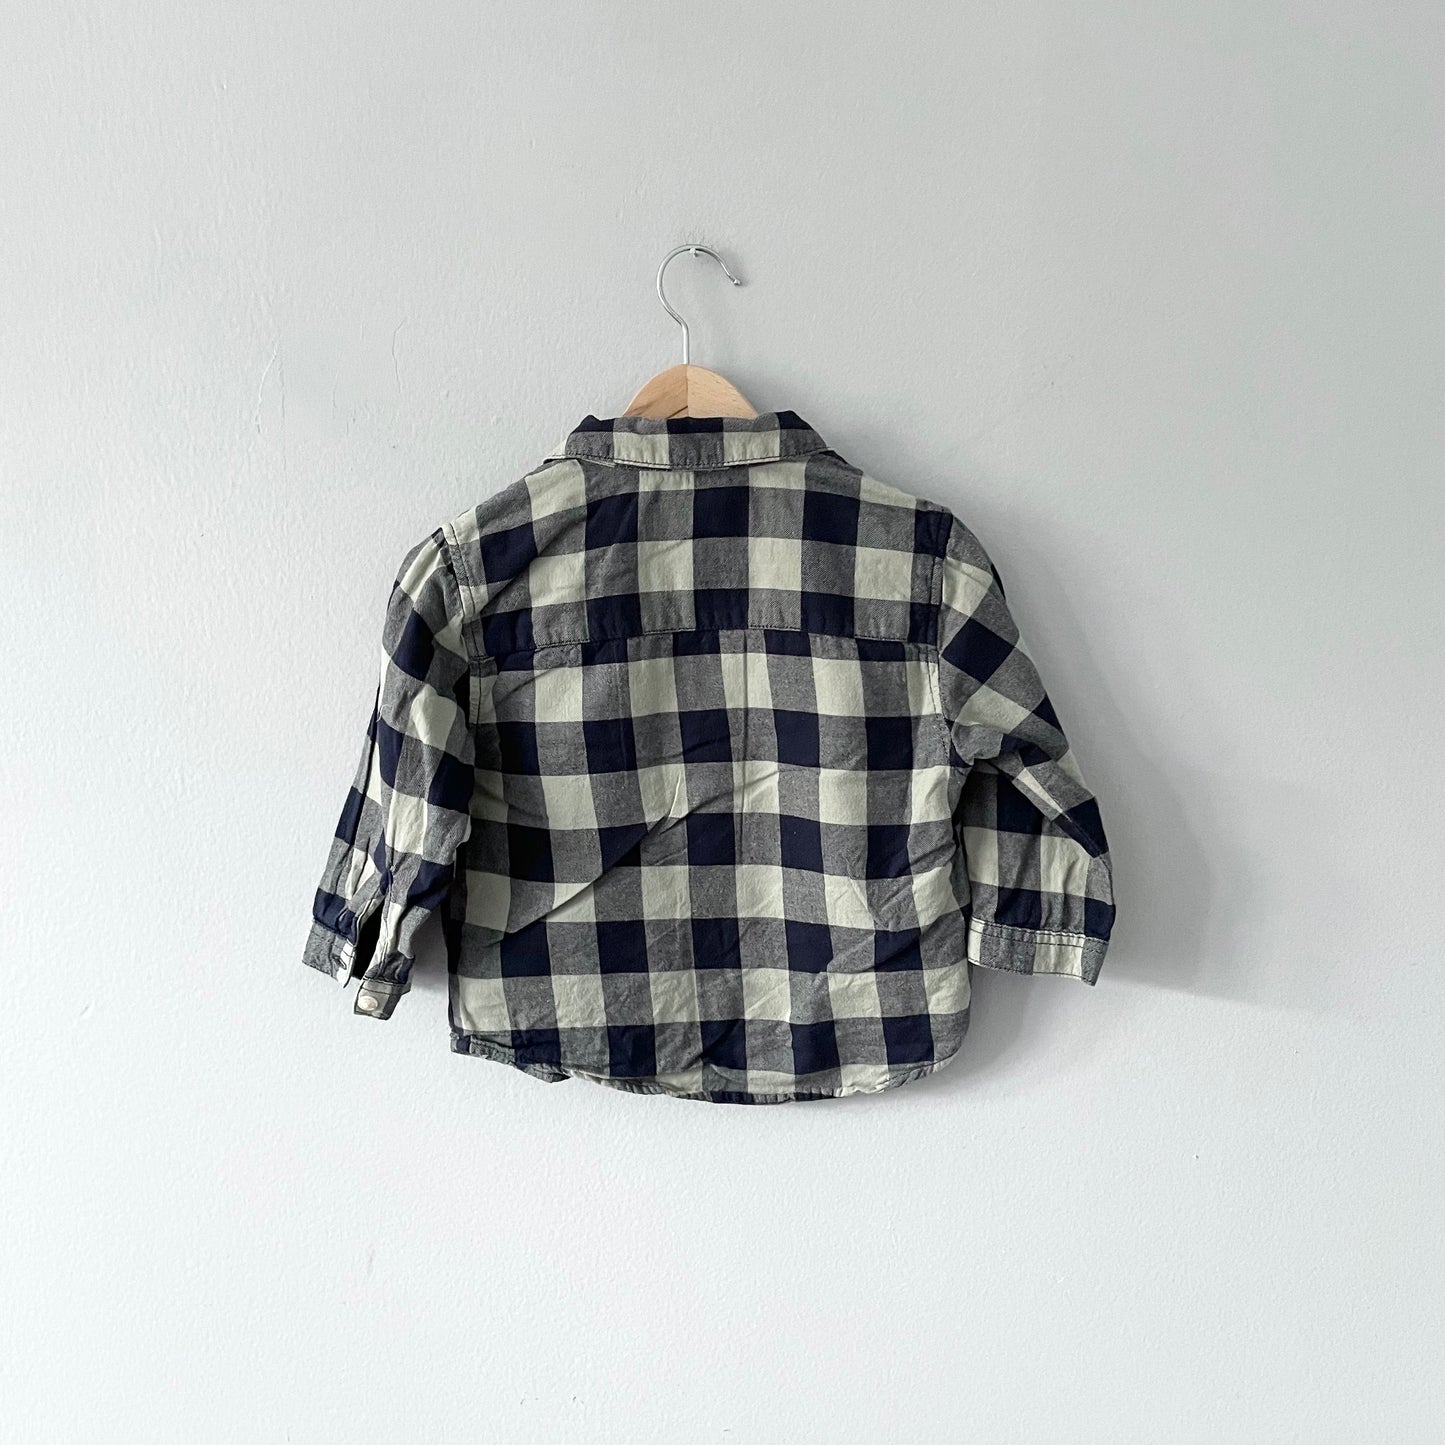 Zara / Checked flannel shirt / 12-18M